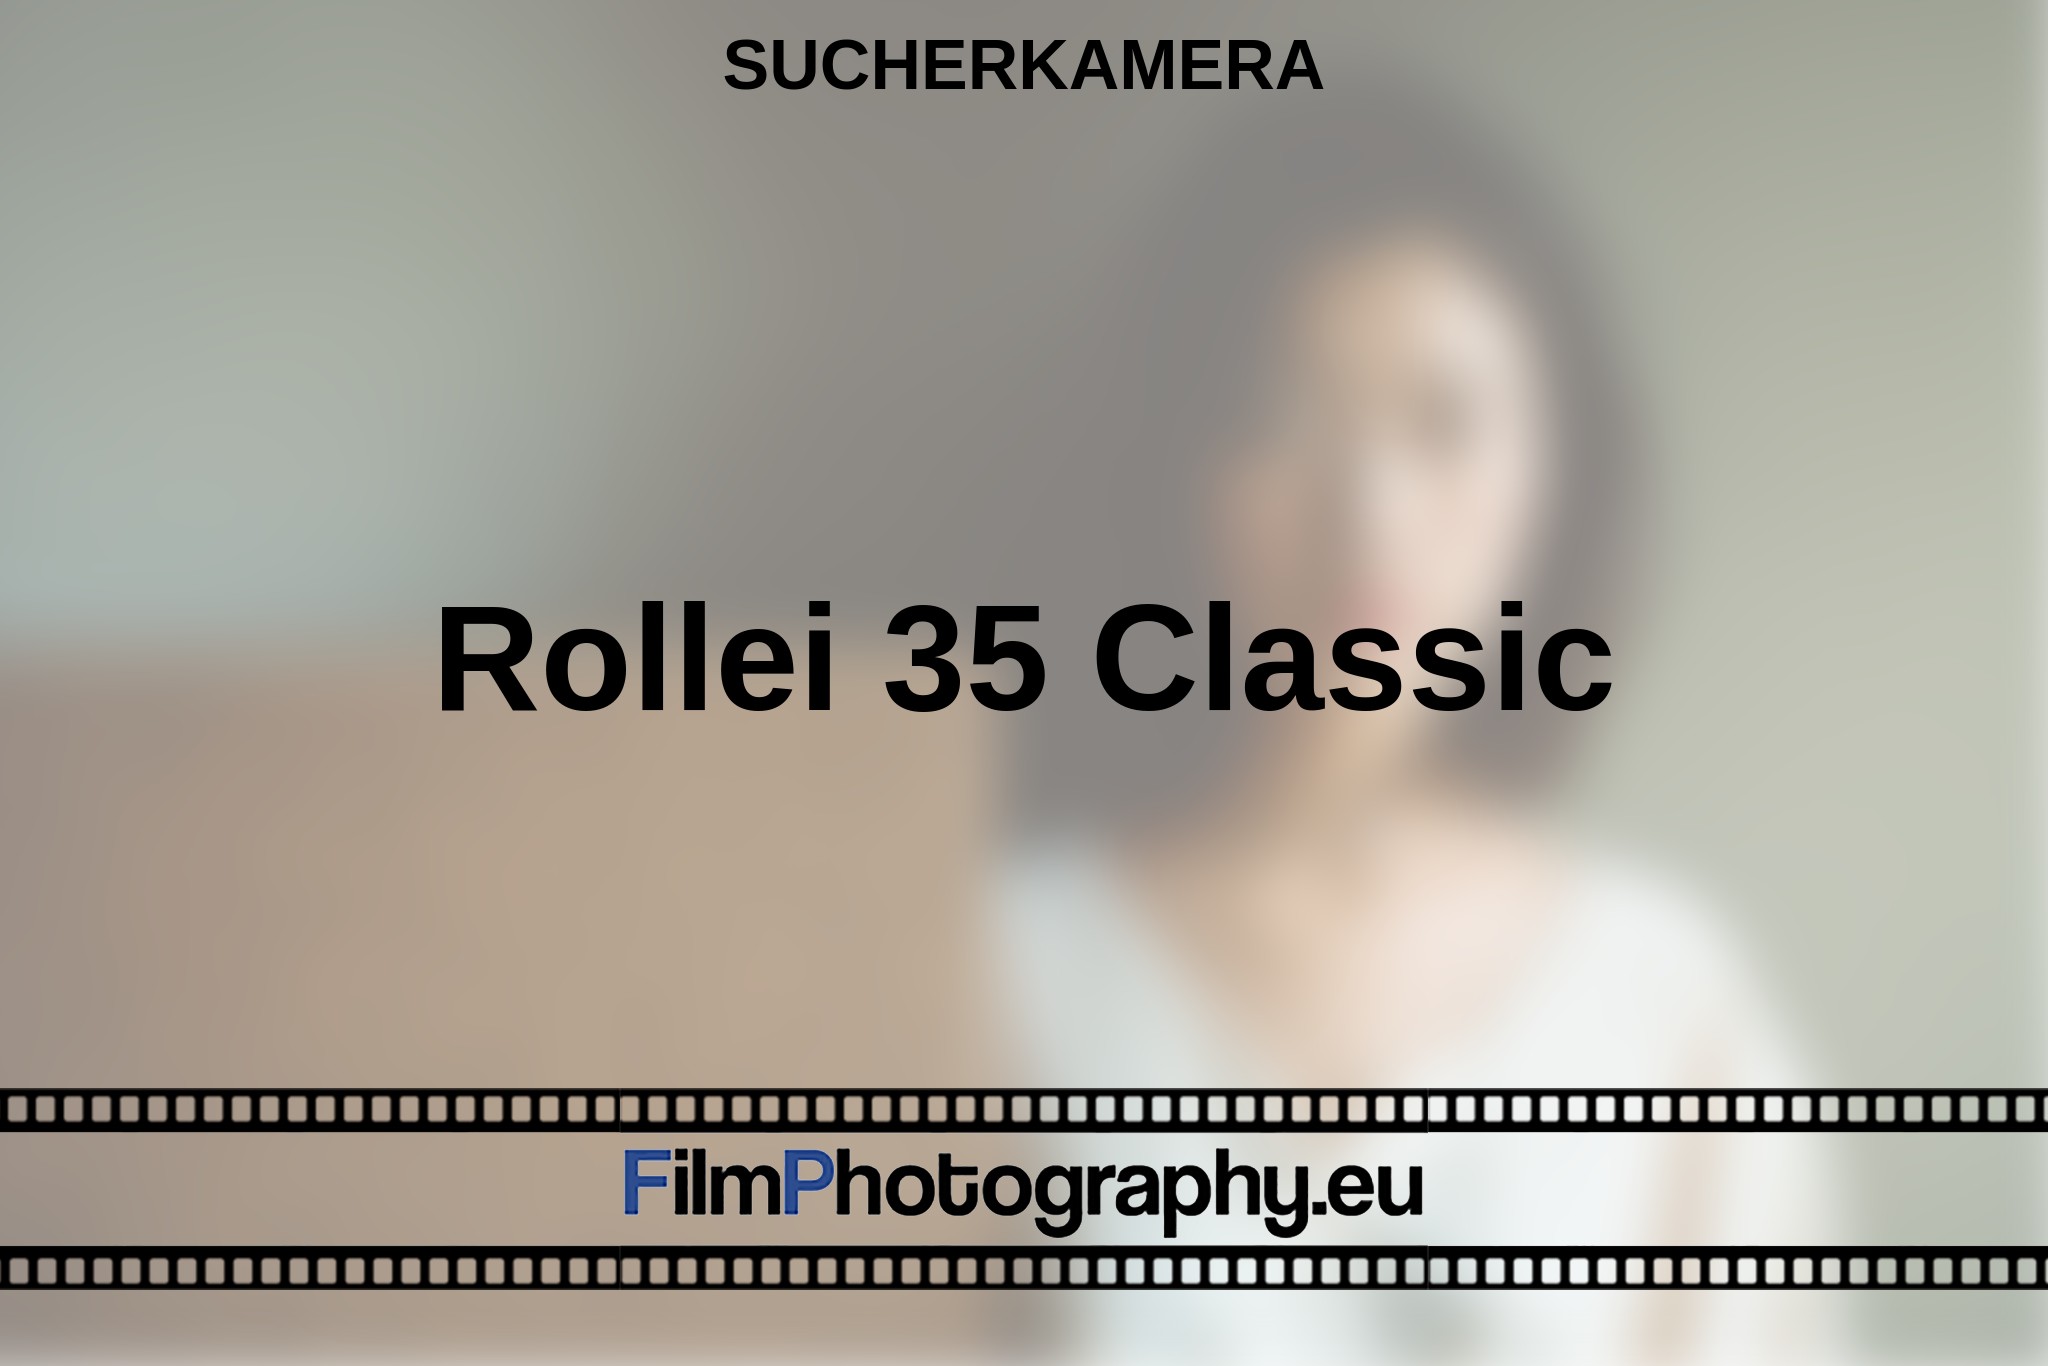 rollei-35-classic-sucherkamera-bnv.jpg